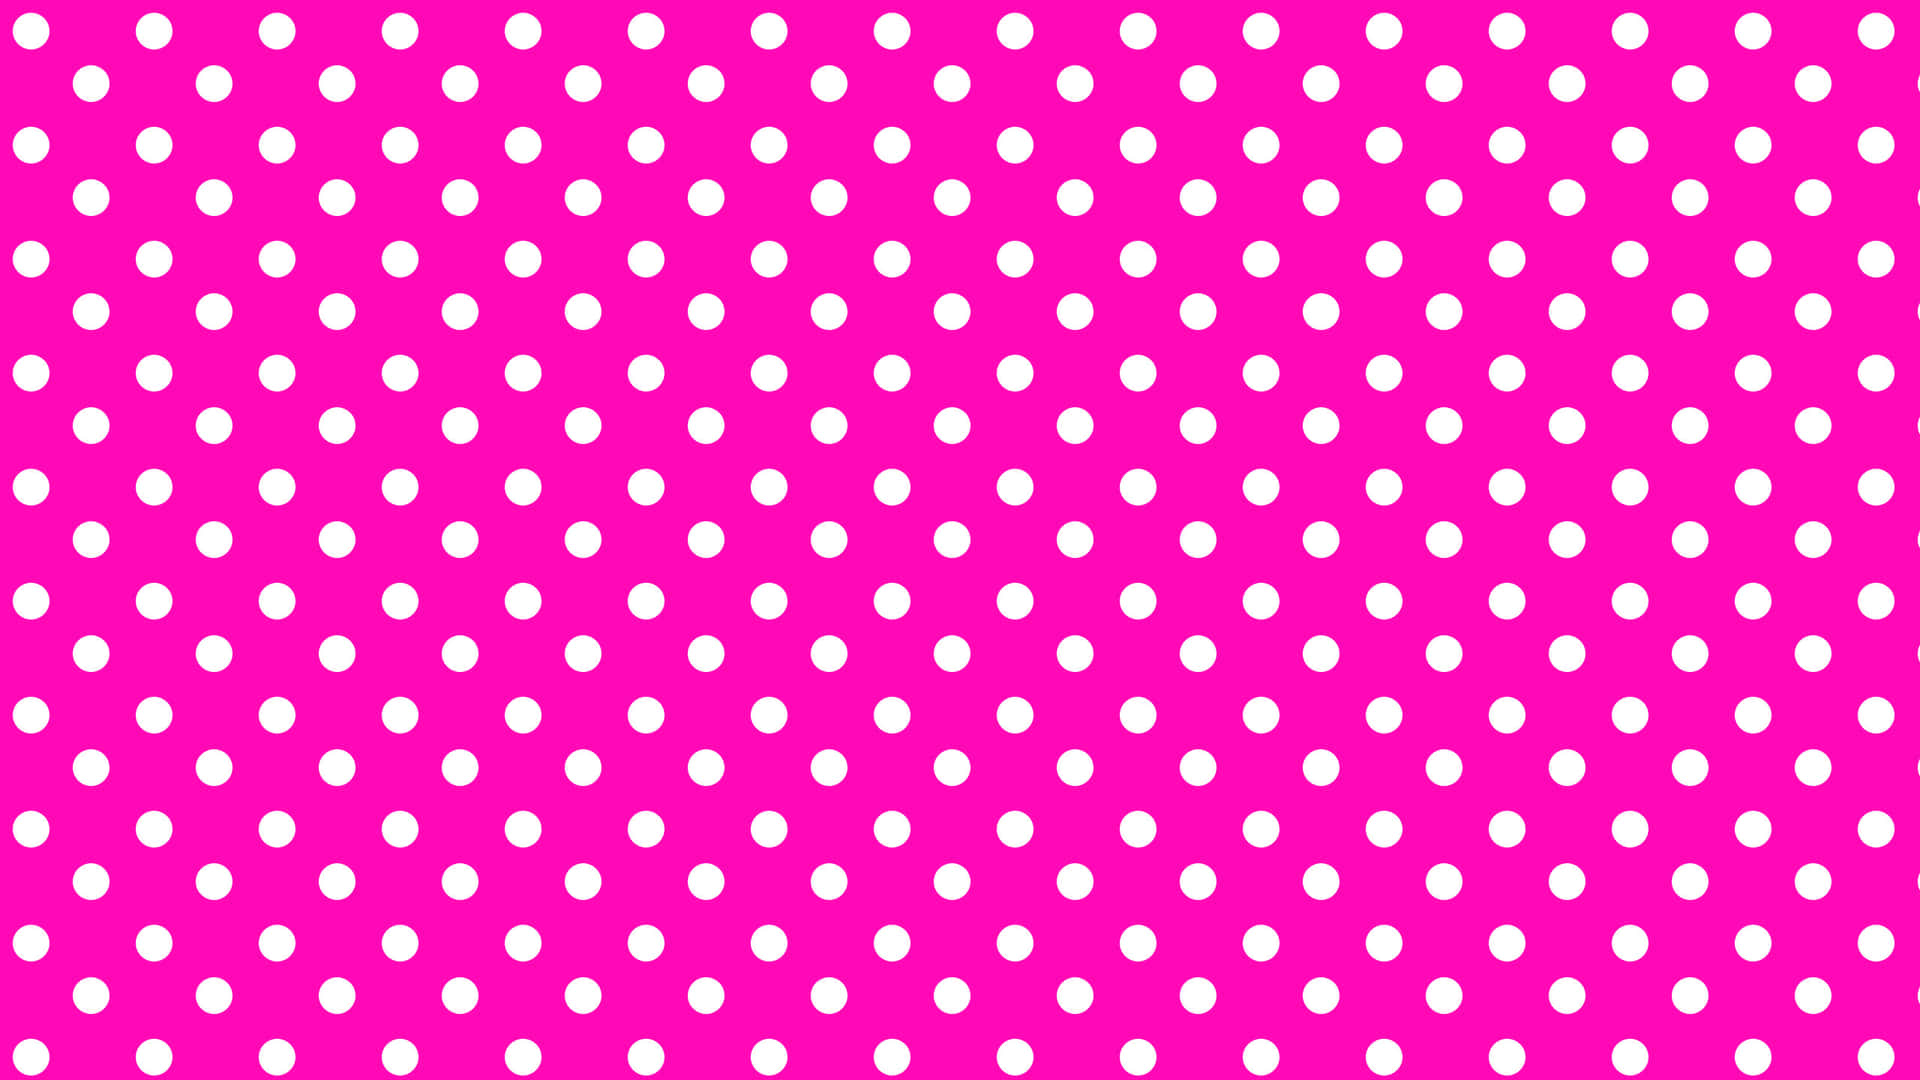 6. Polka Dot Black, White, and Hot Pink Nail Design - wide 8